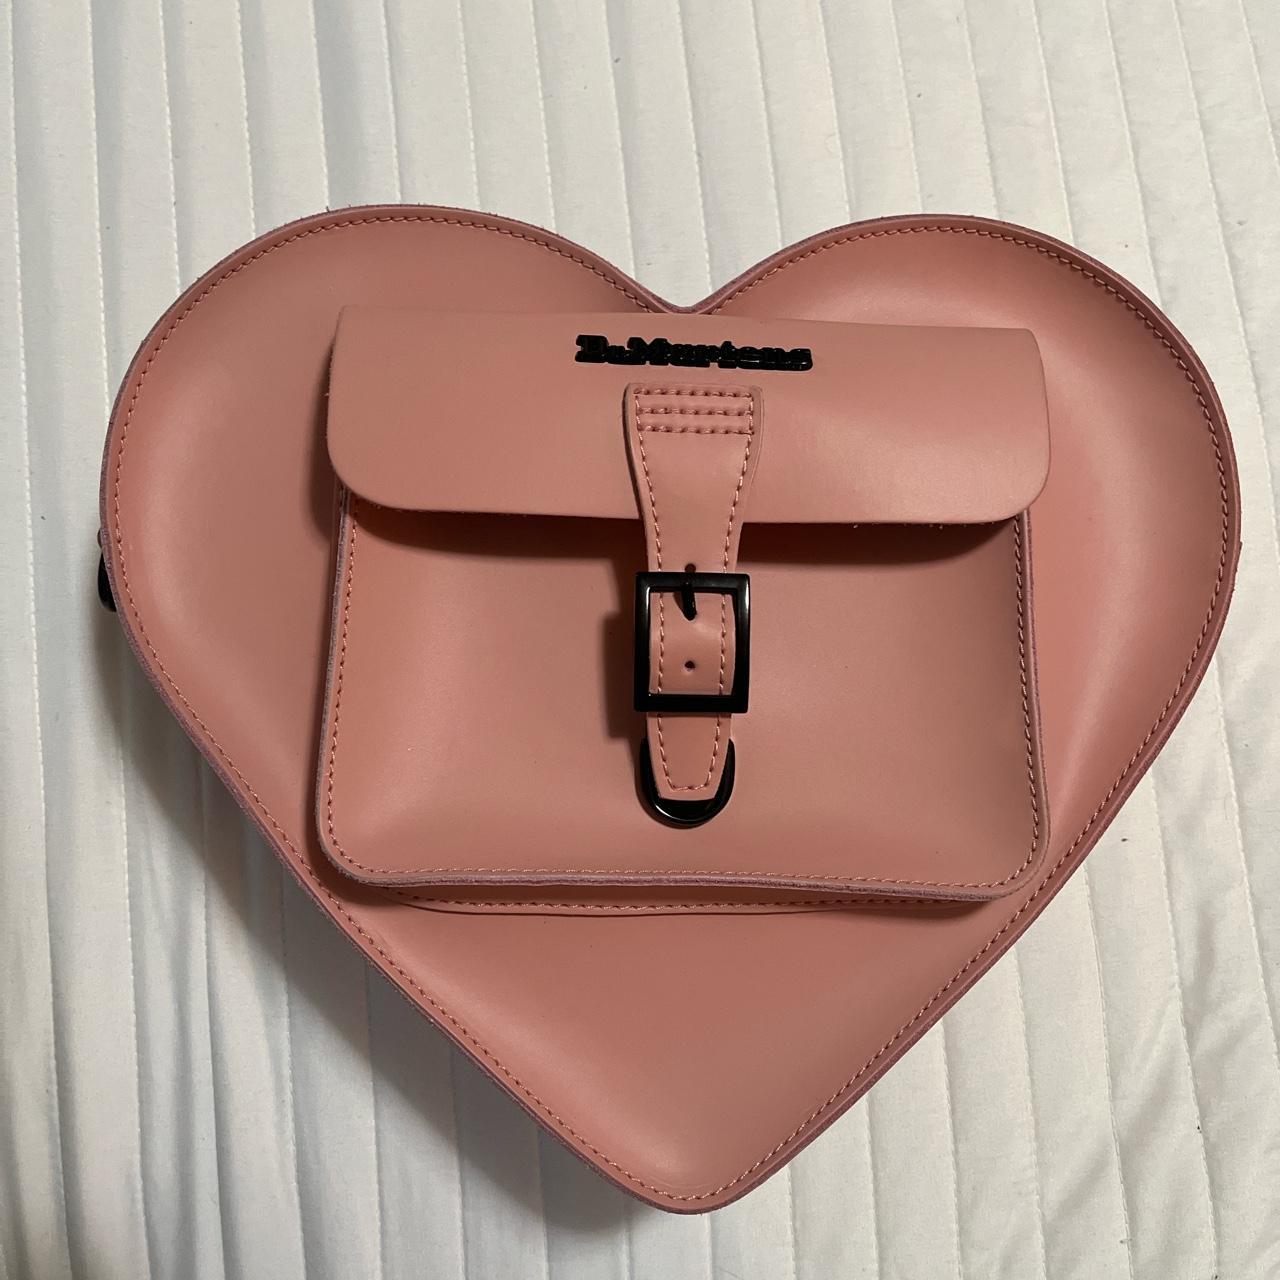 Dr Martens super rare bag. Heart shaped red and - Depop